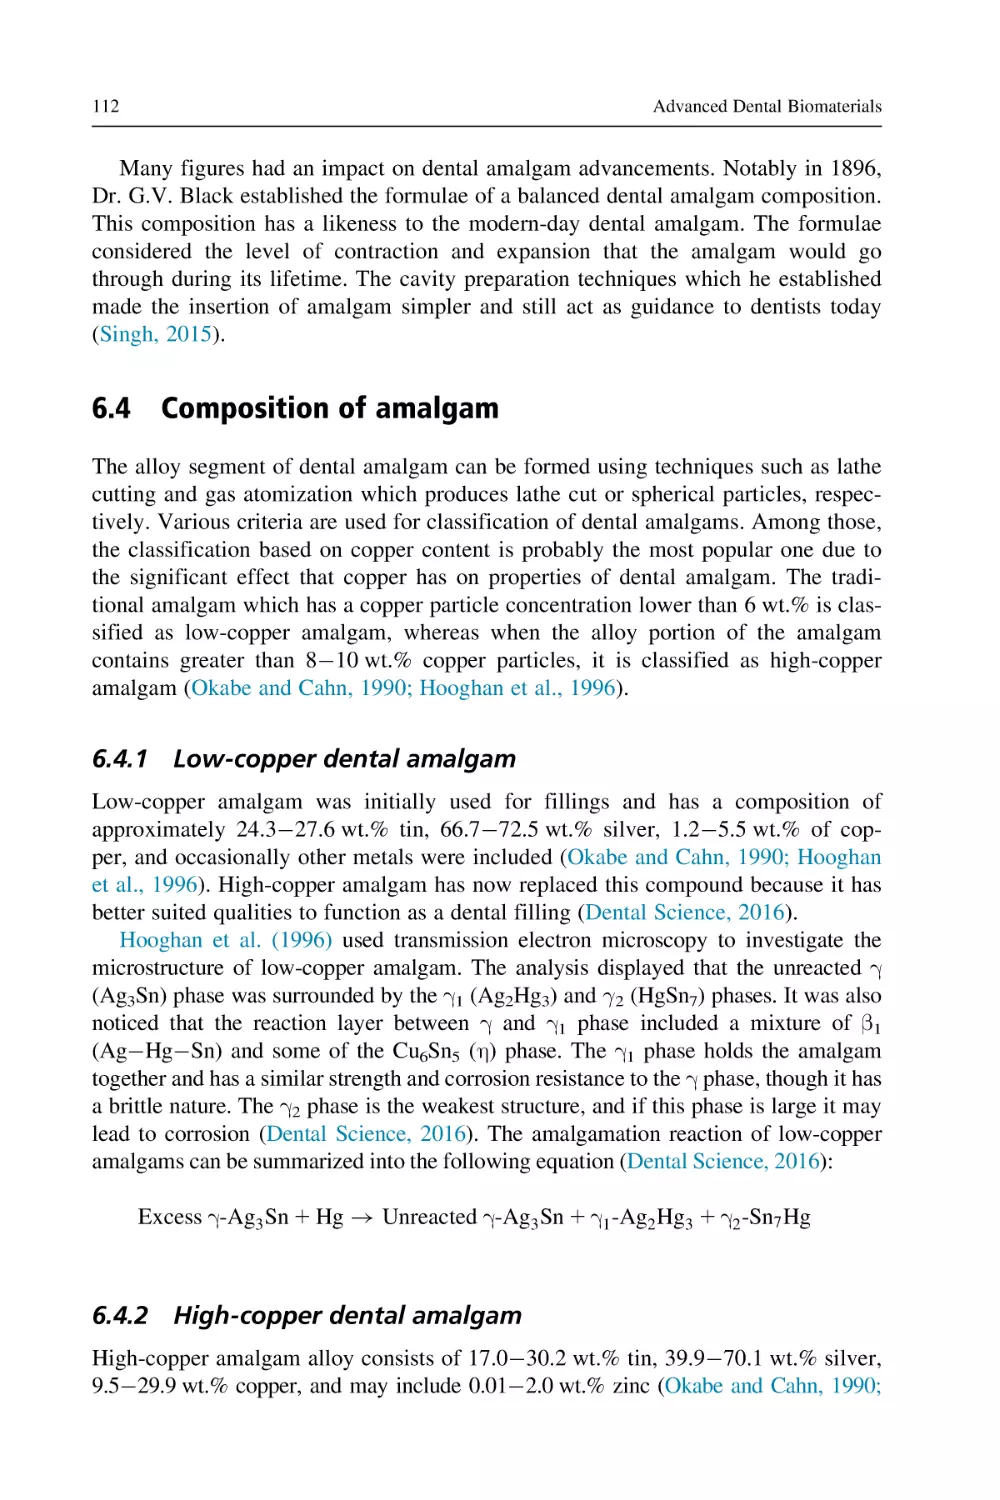 6.4 Composition of amalgam
6.4.1 Low-copper dental amalgam
6.4.2 High-copper dental amalgam